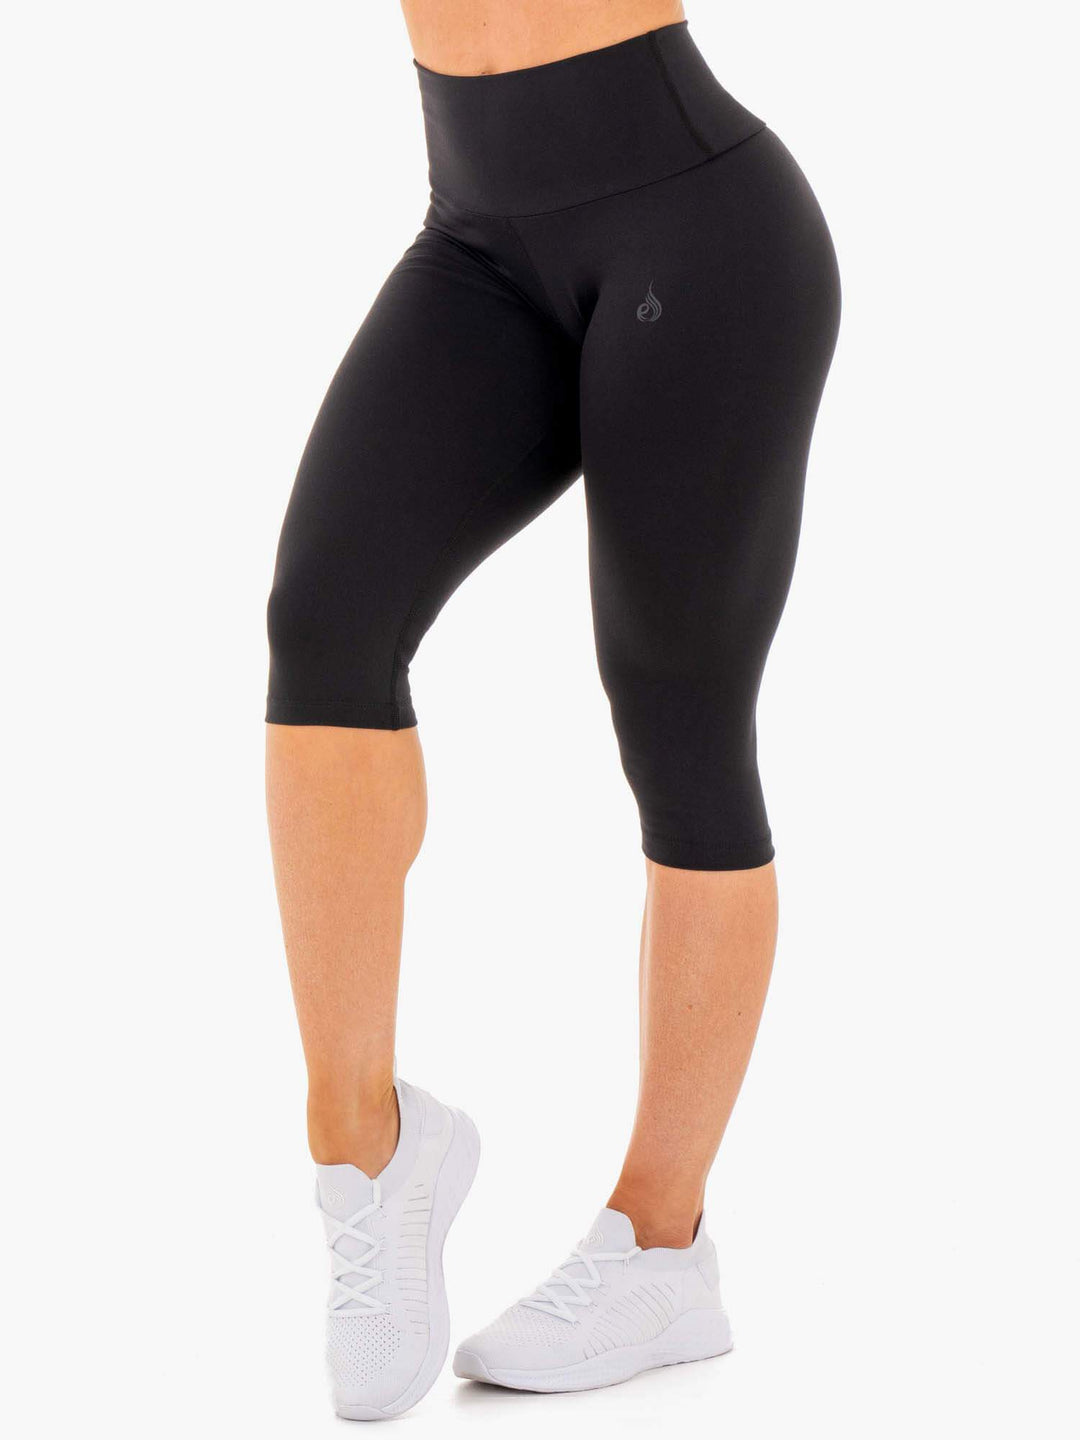 Black2Gray Capri Leggings, Gym, Fitness & Sports Clothing